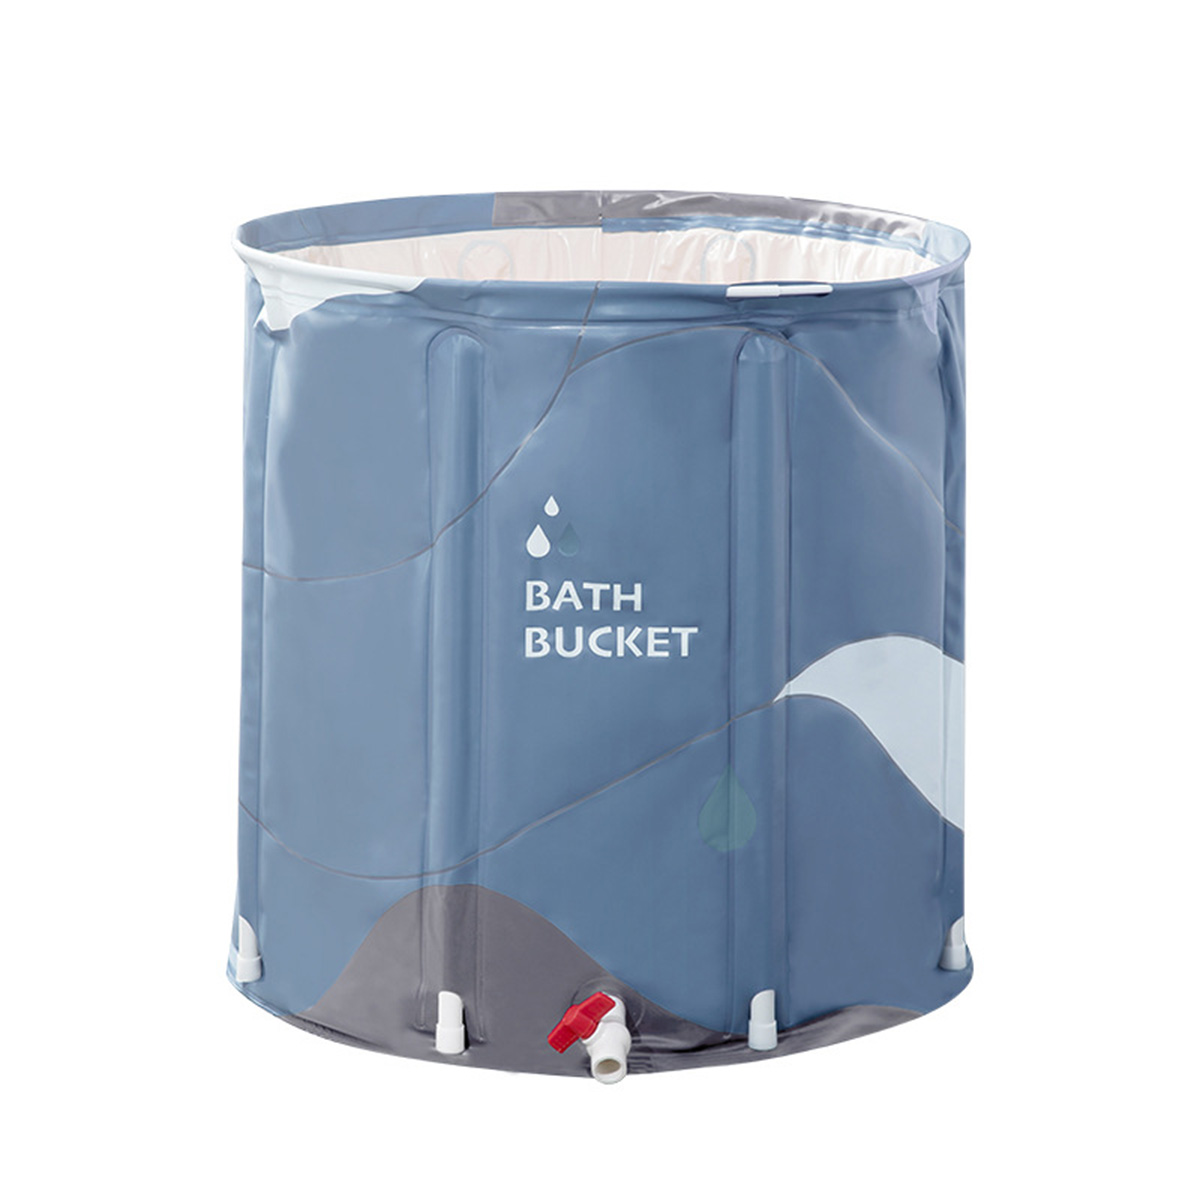 Portable Bathtub Water Tub Folding PVC Adult Spa Bath Bucket Indoor Home 65*70cm